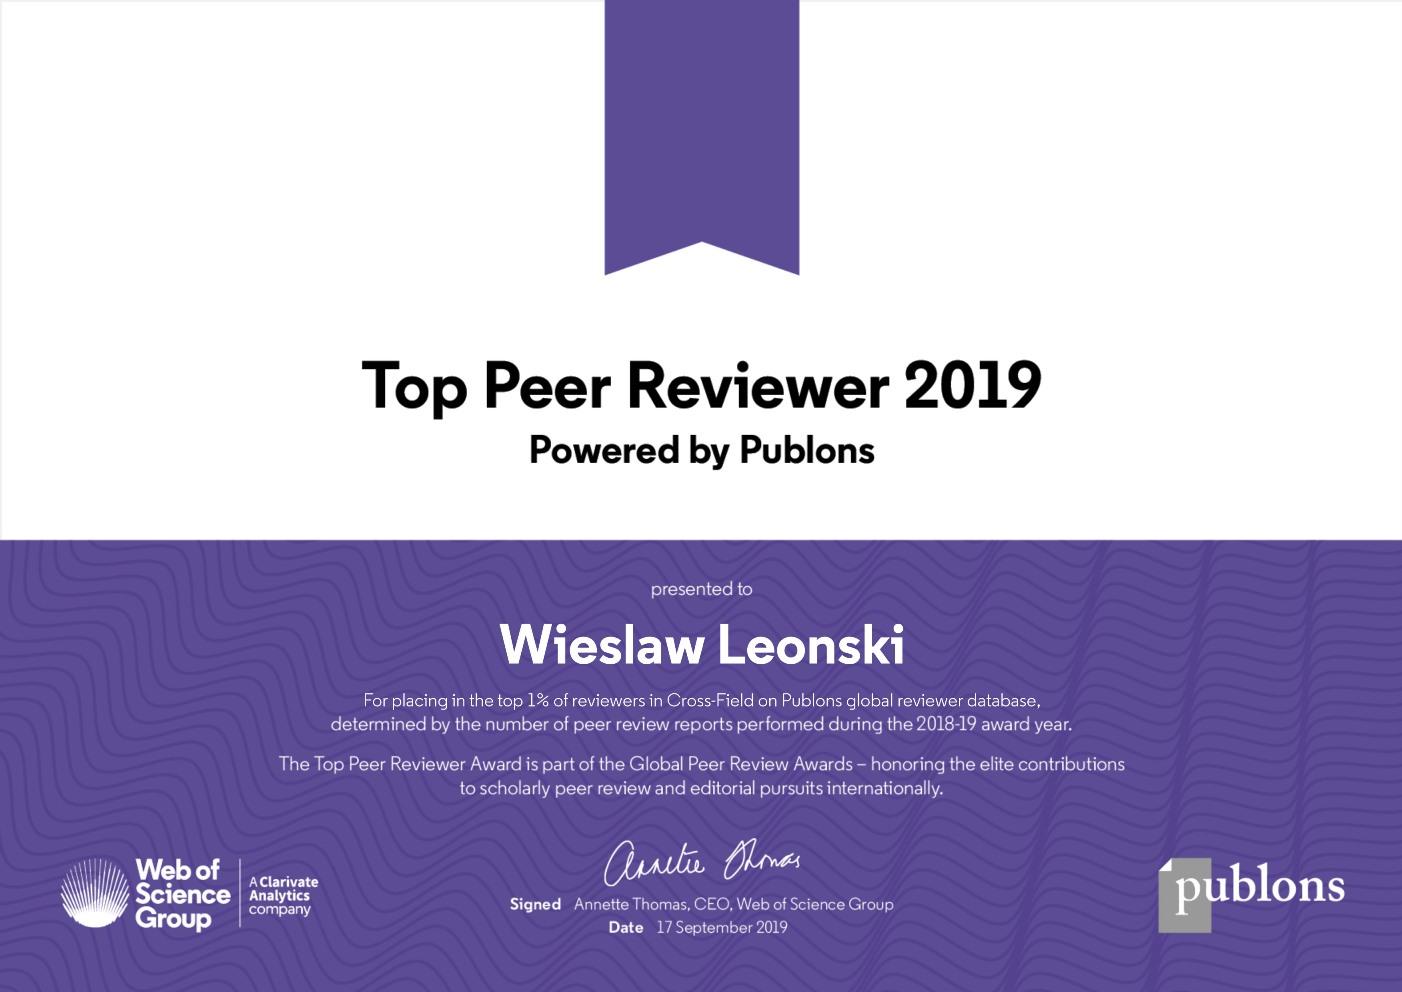 WieslawLeonski - Tom reviewers in Cross-Field award 2019 wł.jpg